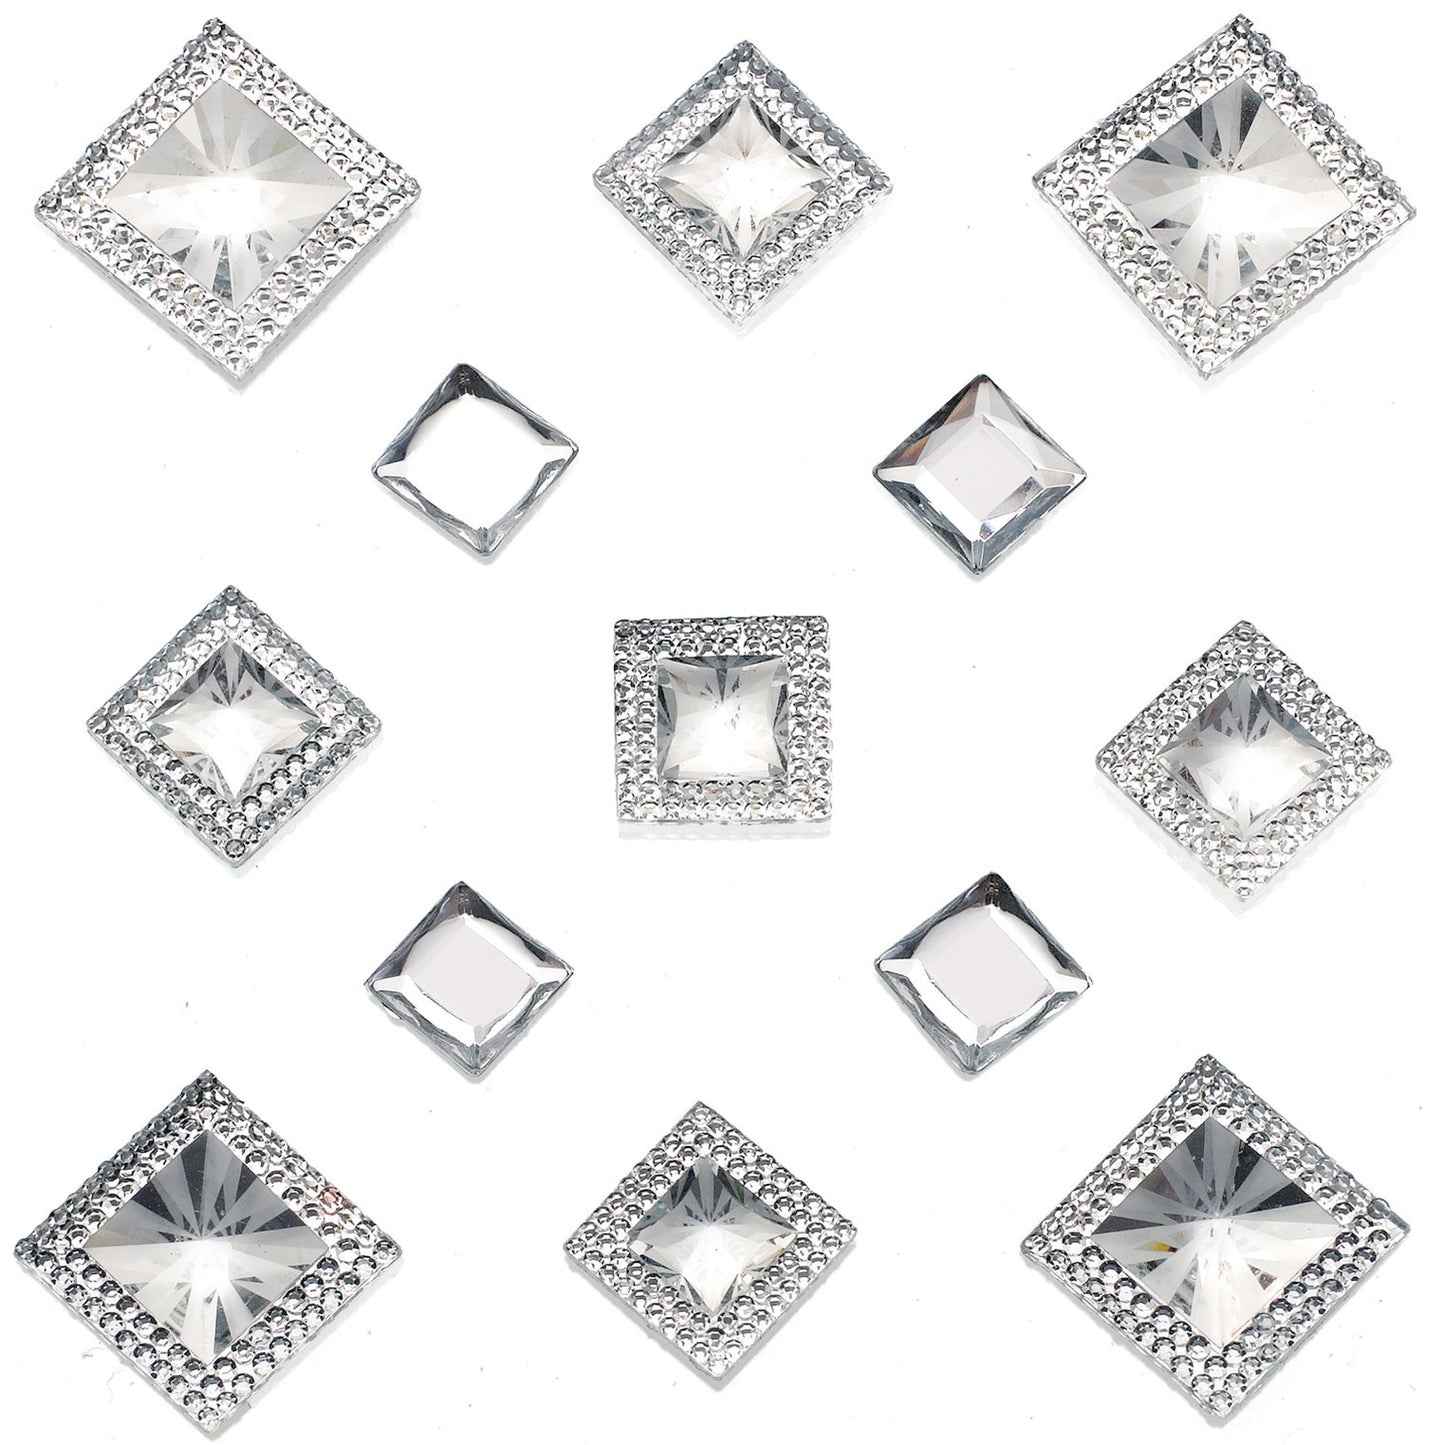 Jolee's Boutique Themed Embellishment-Diamond Pyramid Gems